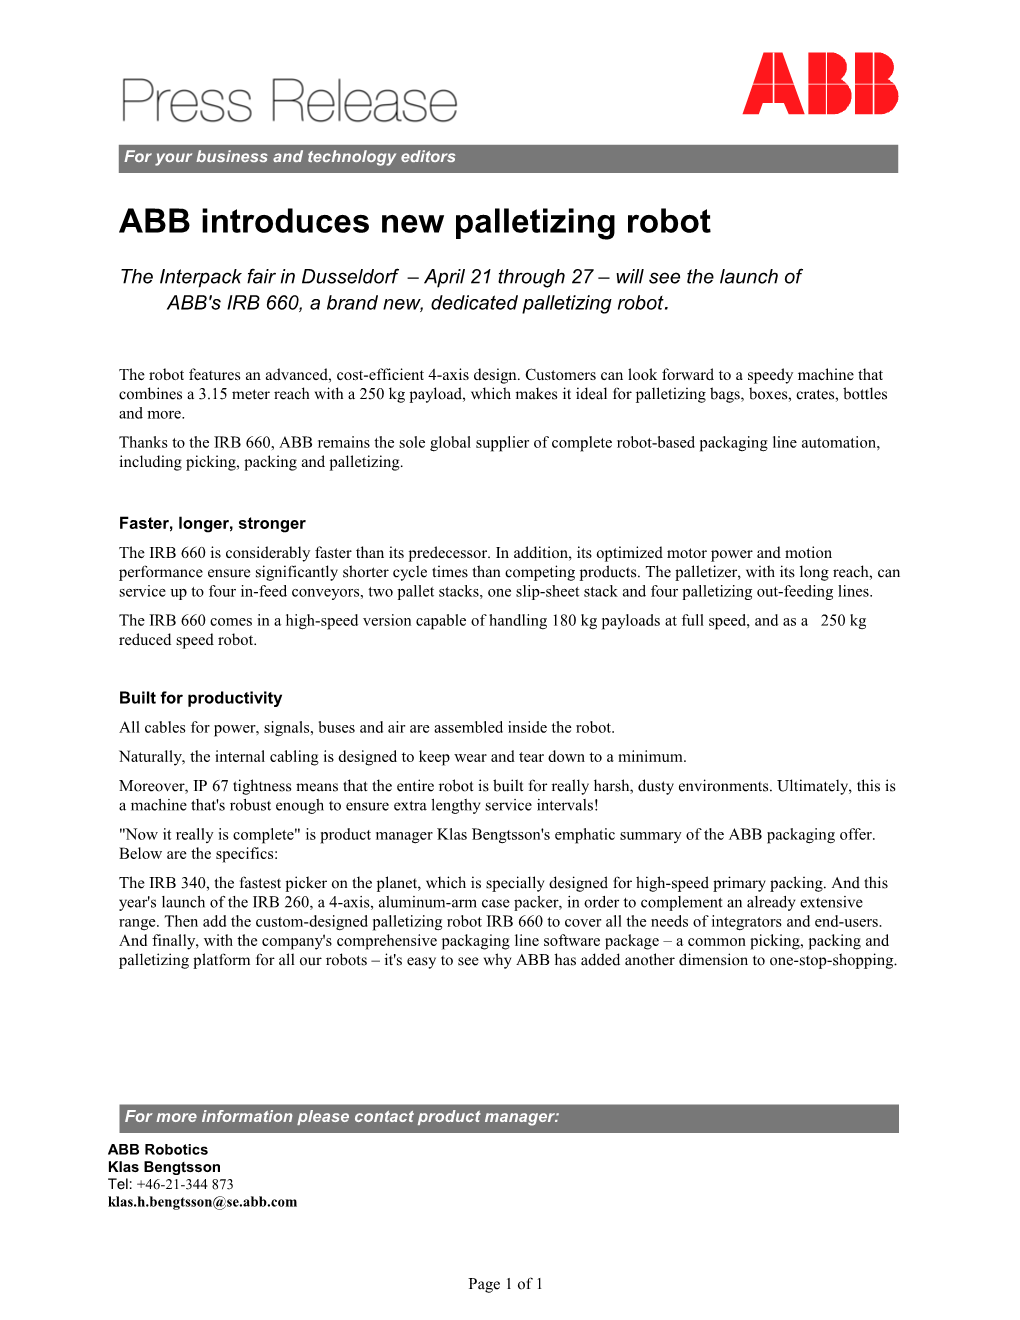 ABB Introduces New Palletizing Robot